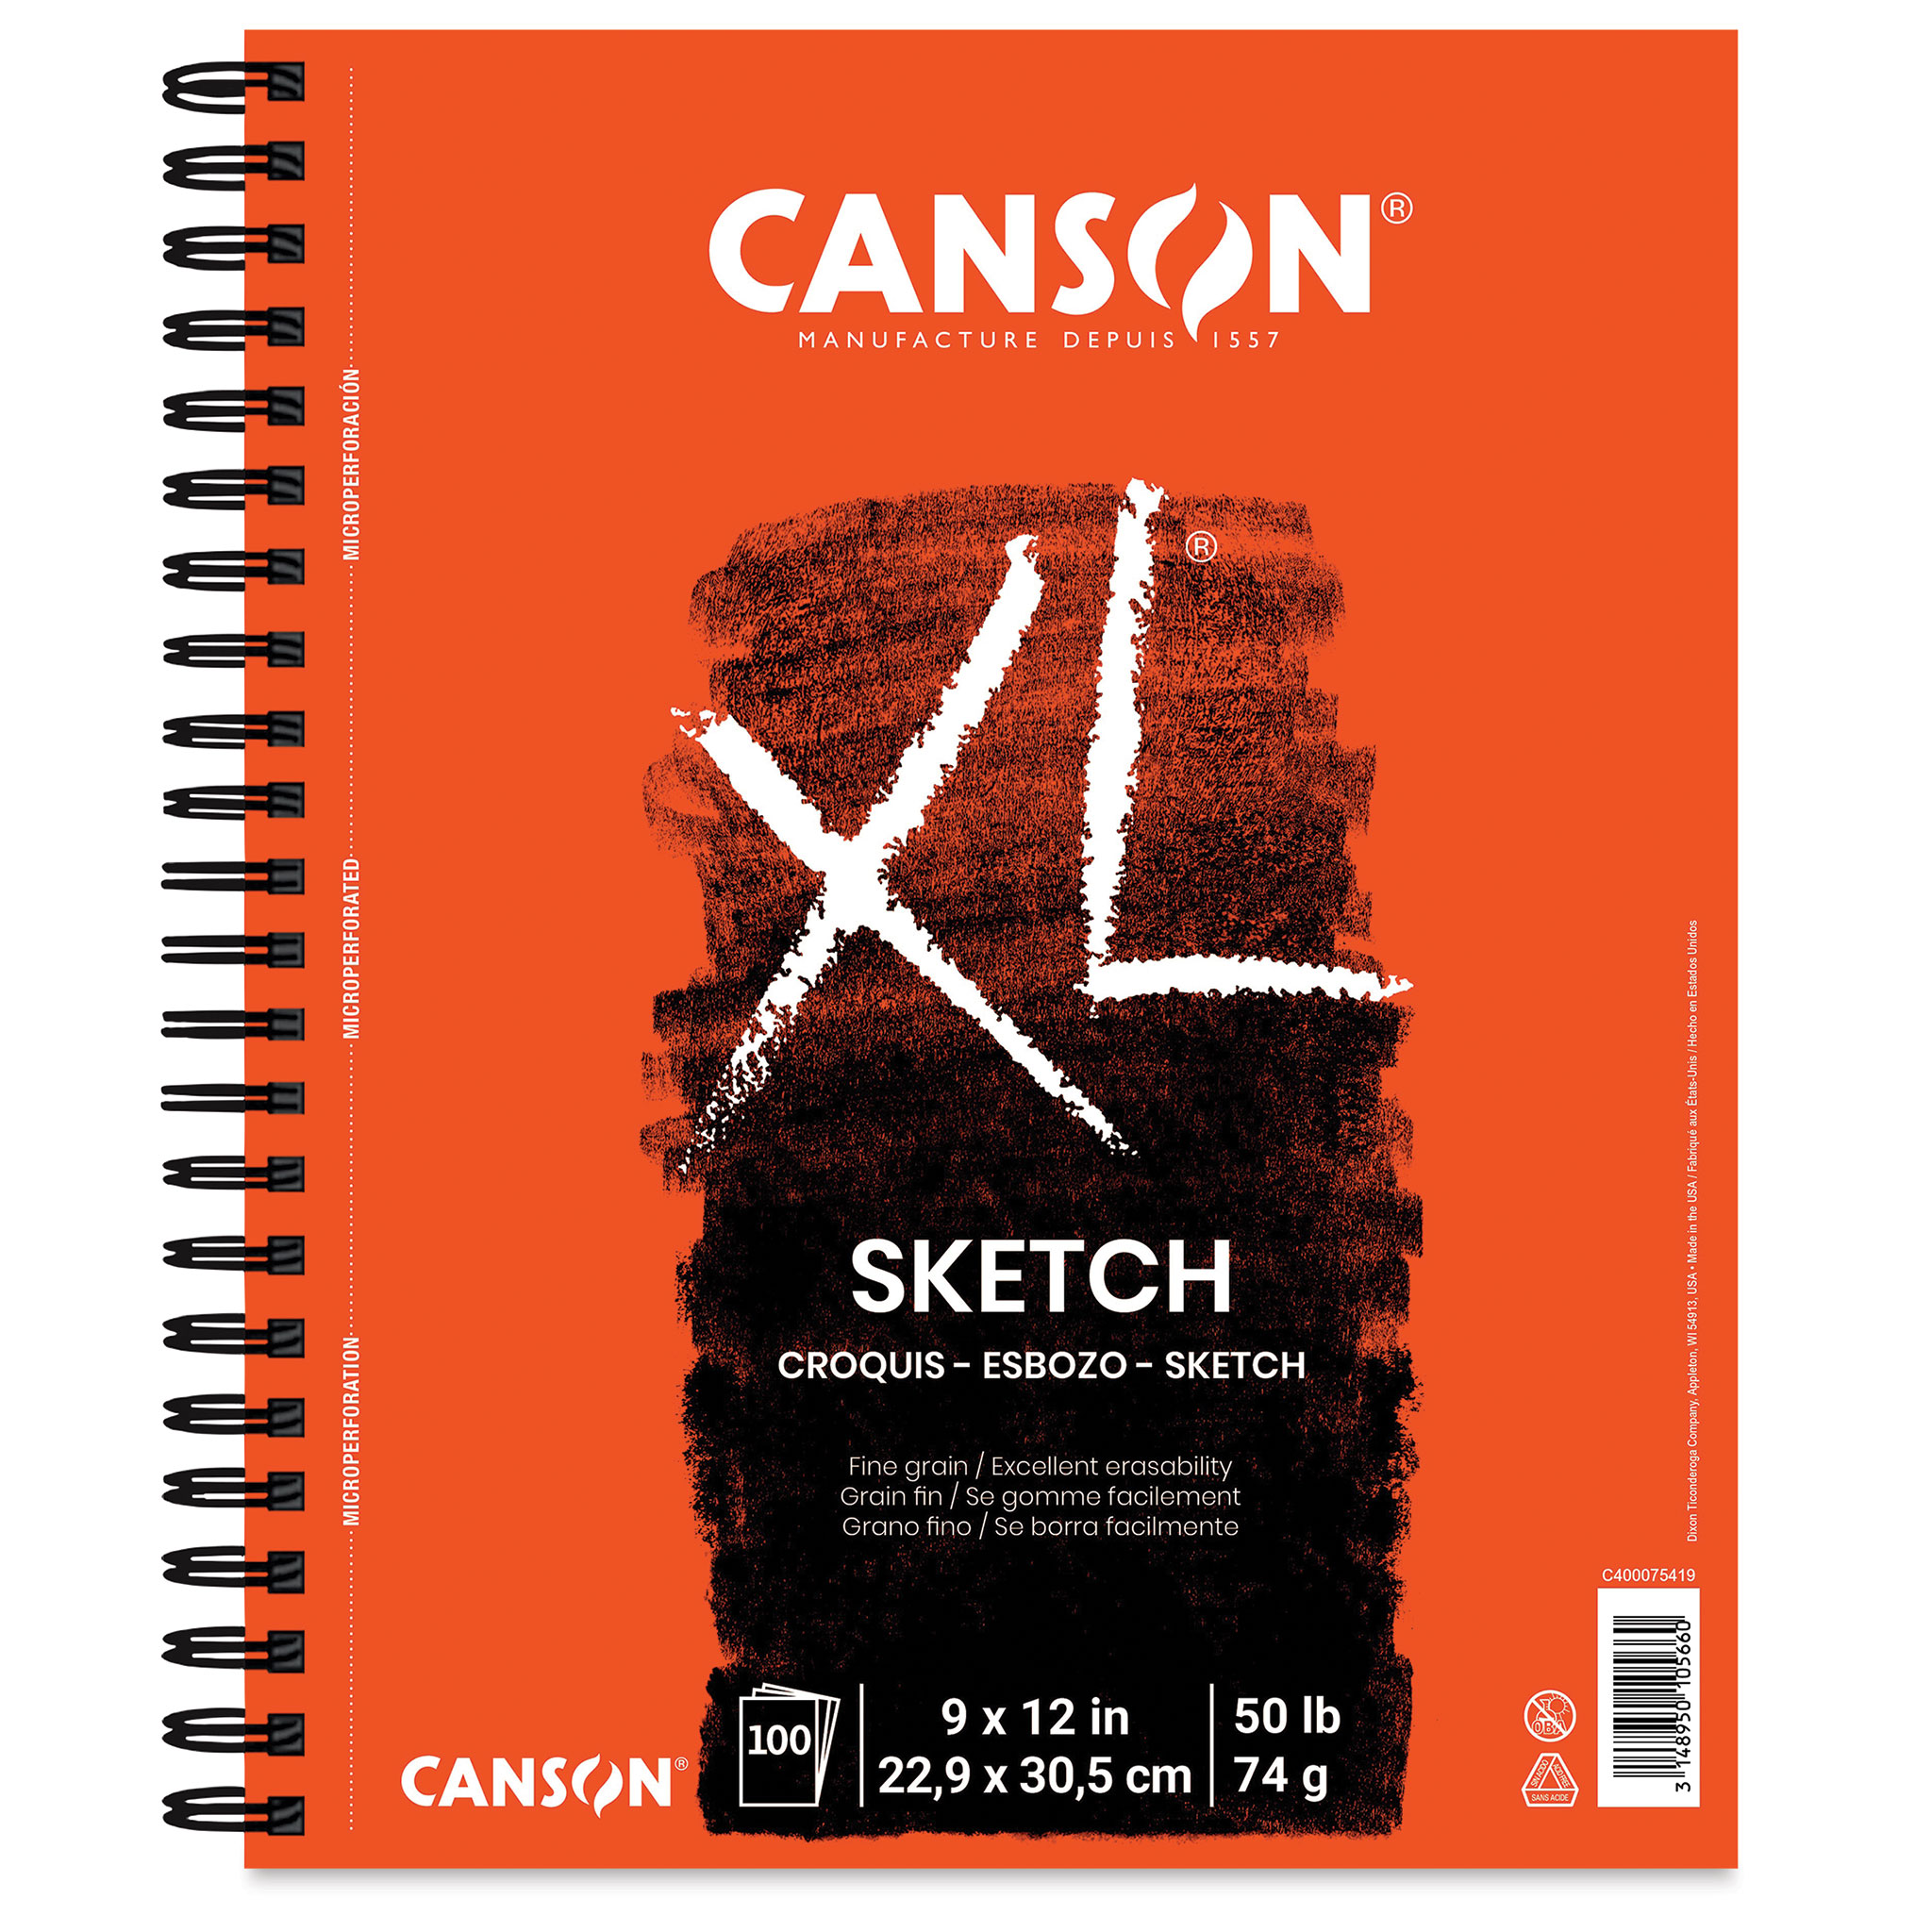 Canson XL Series Mix Media Paper Pad 18 x 24 30 Sheets